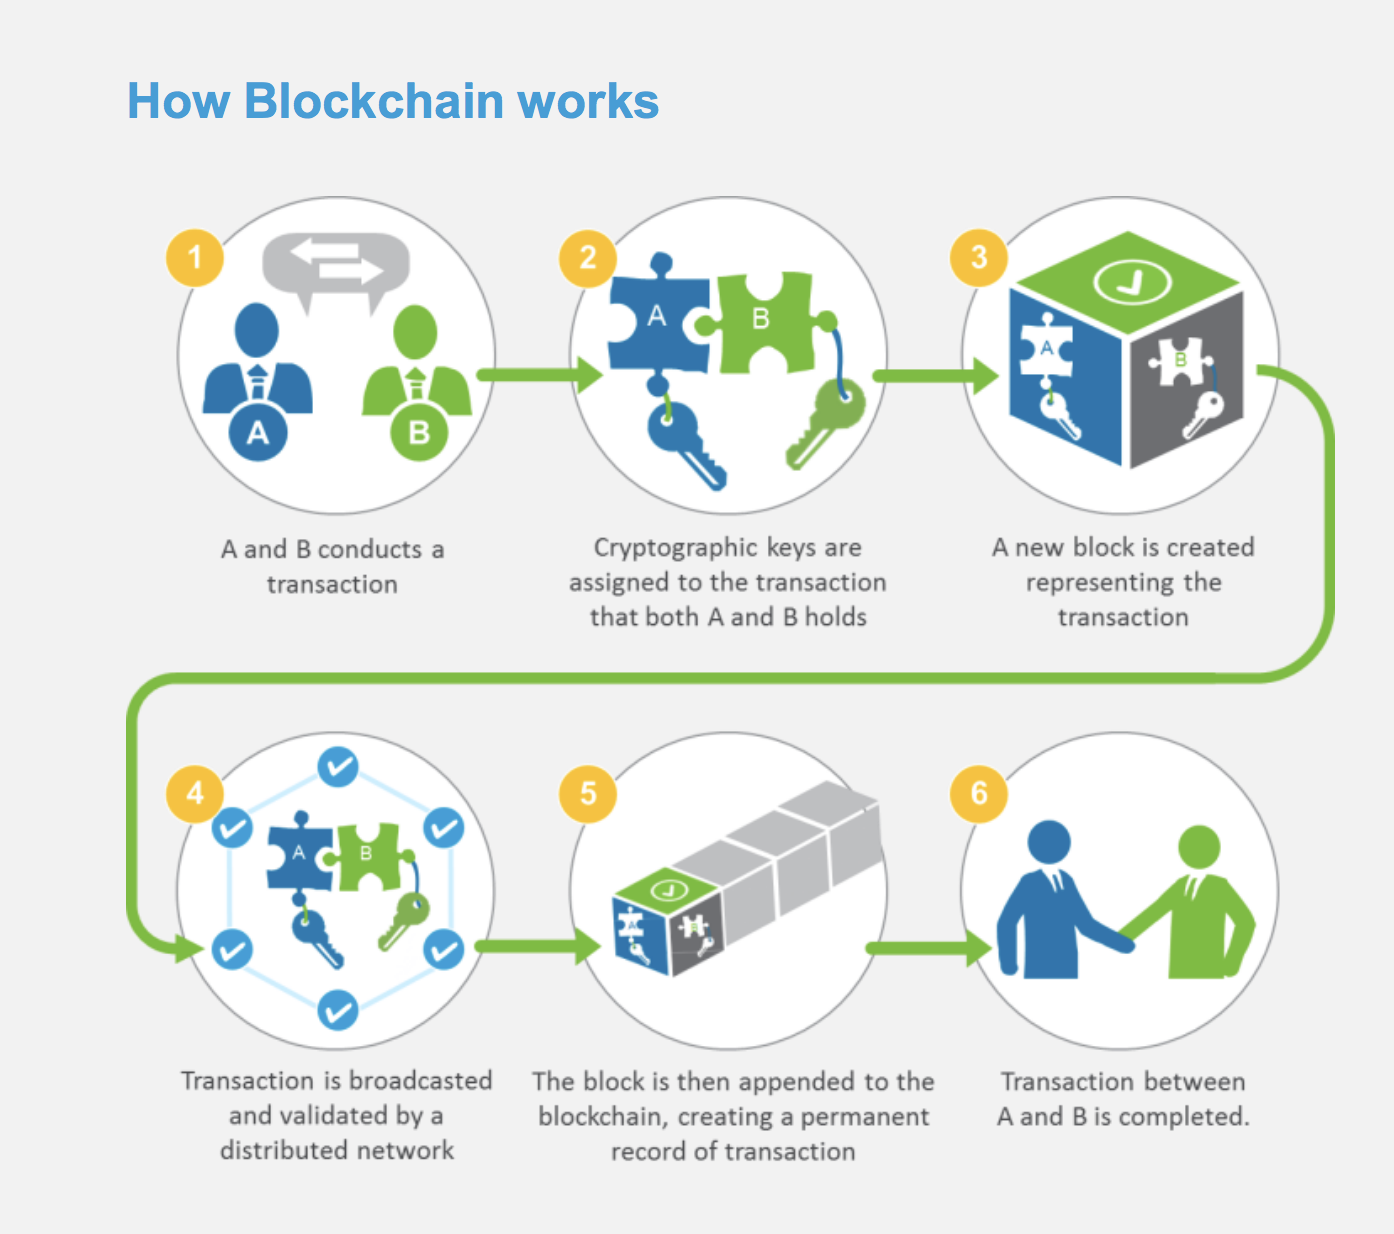 what is.blockchain